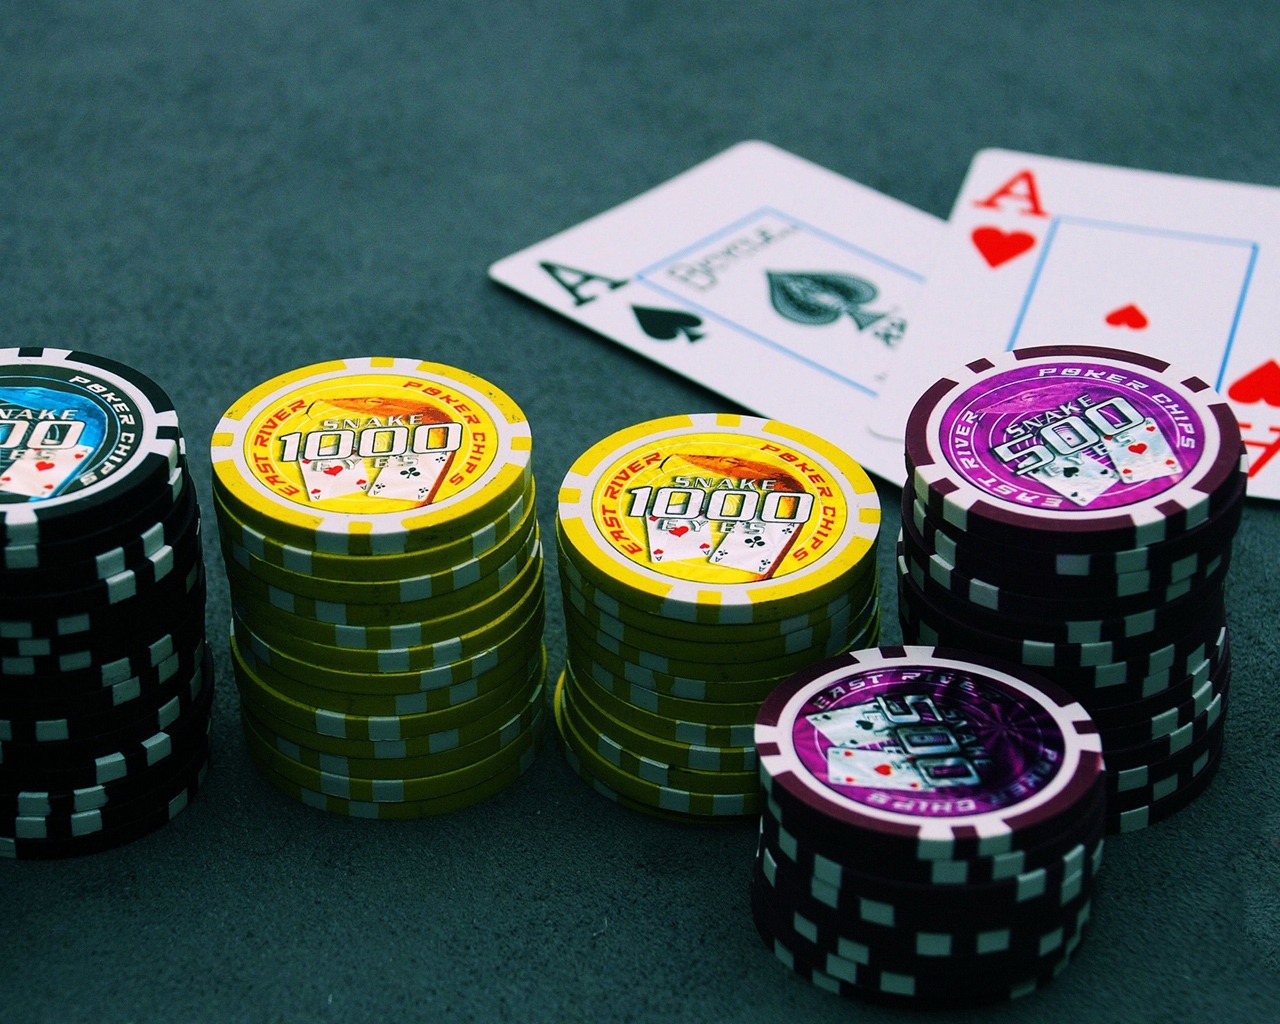 Poker for 1280 x 1024 resolution